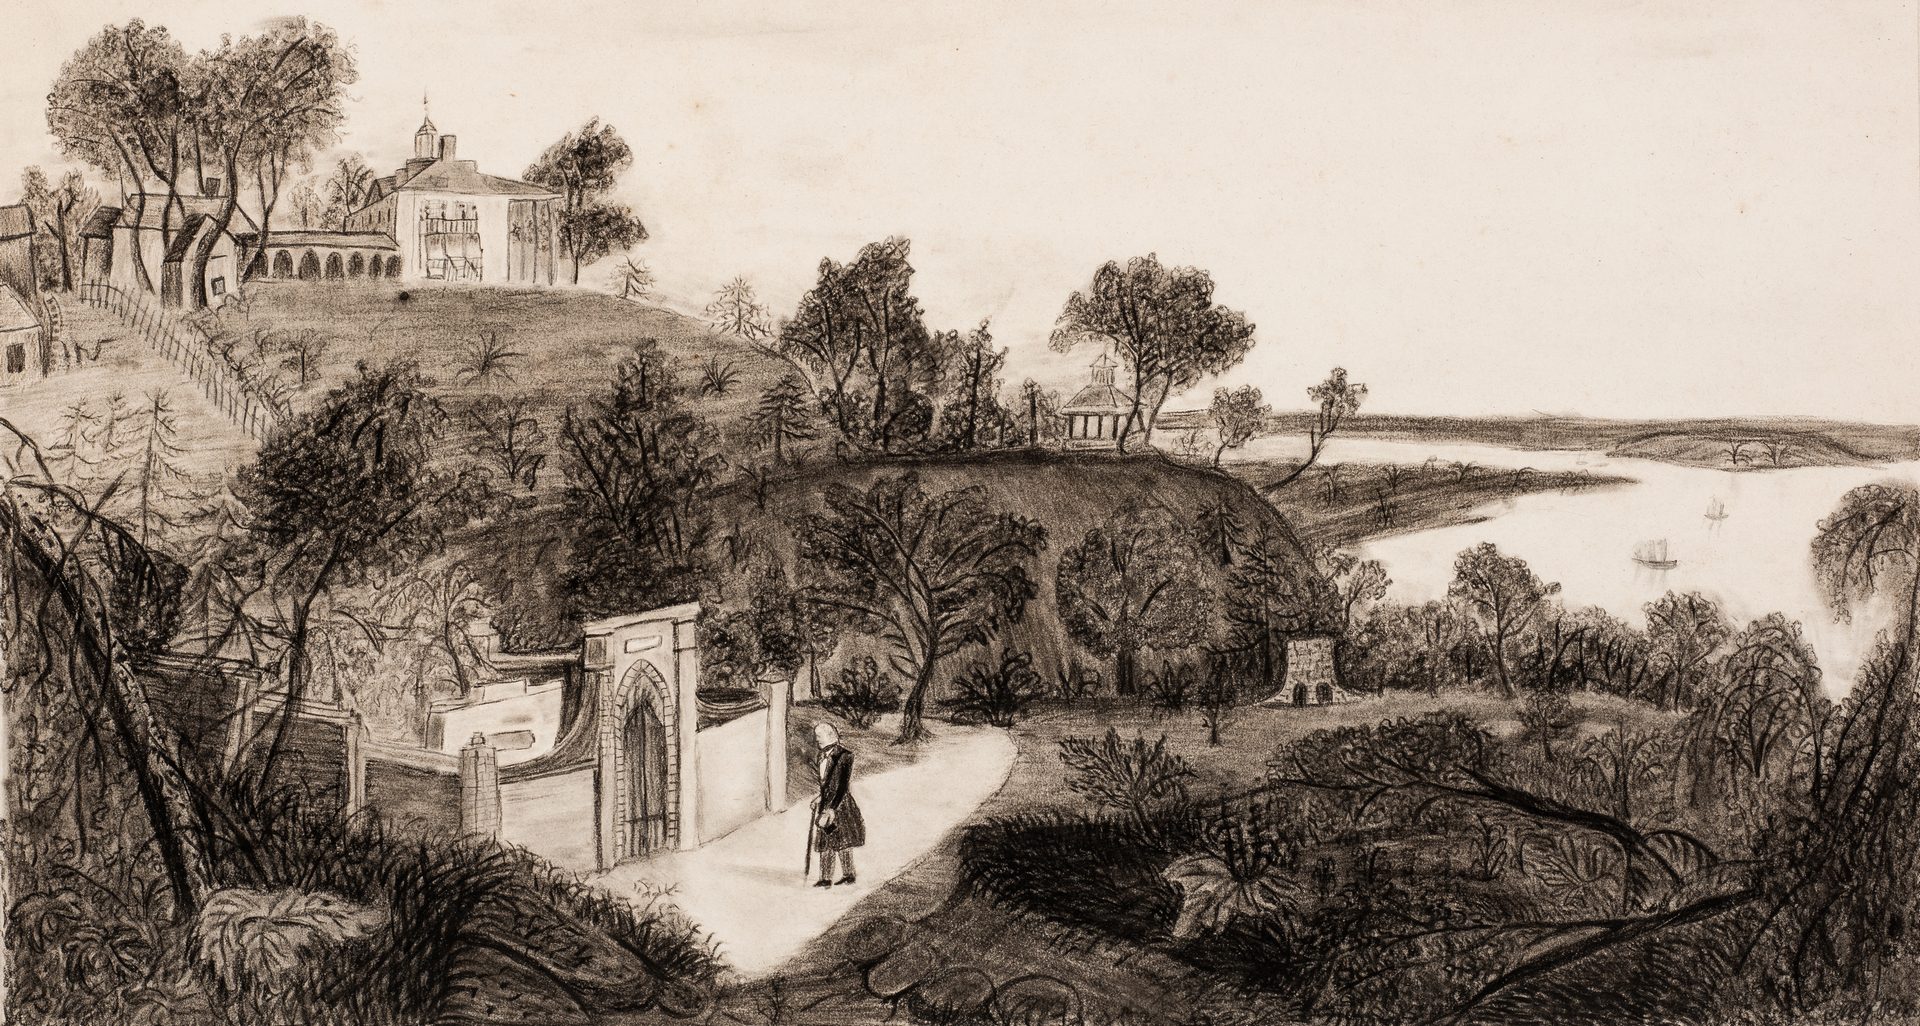 Lot 256: George Washington Tomb Drawing, 1850